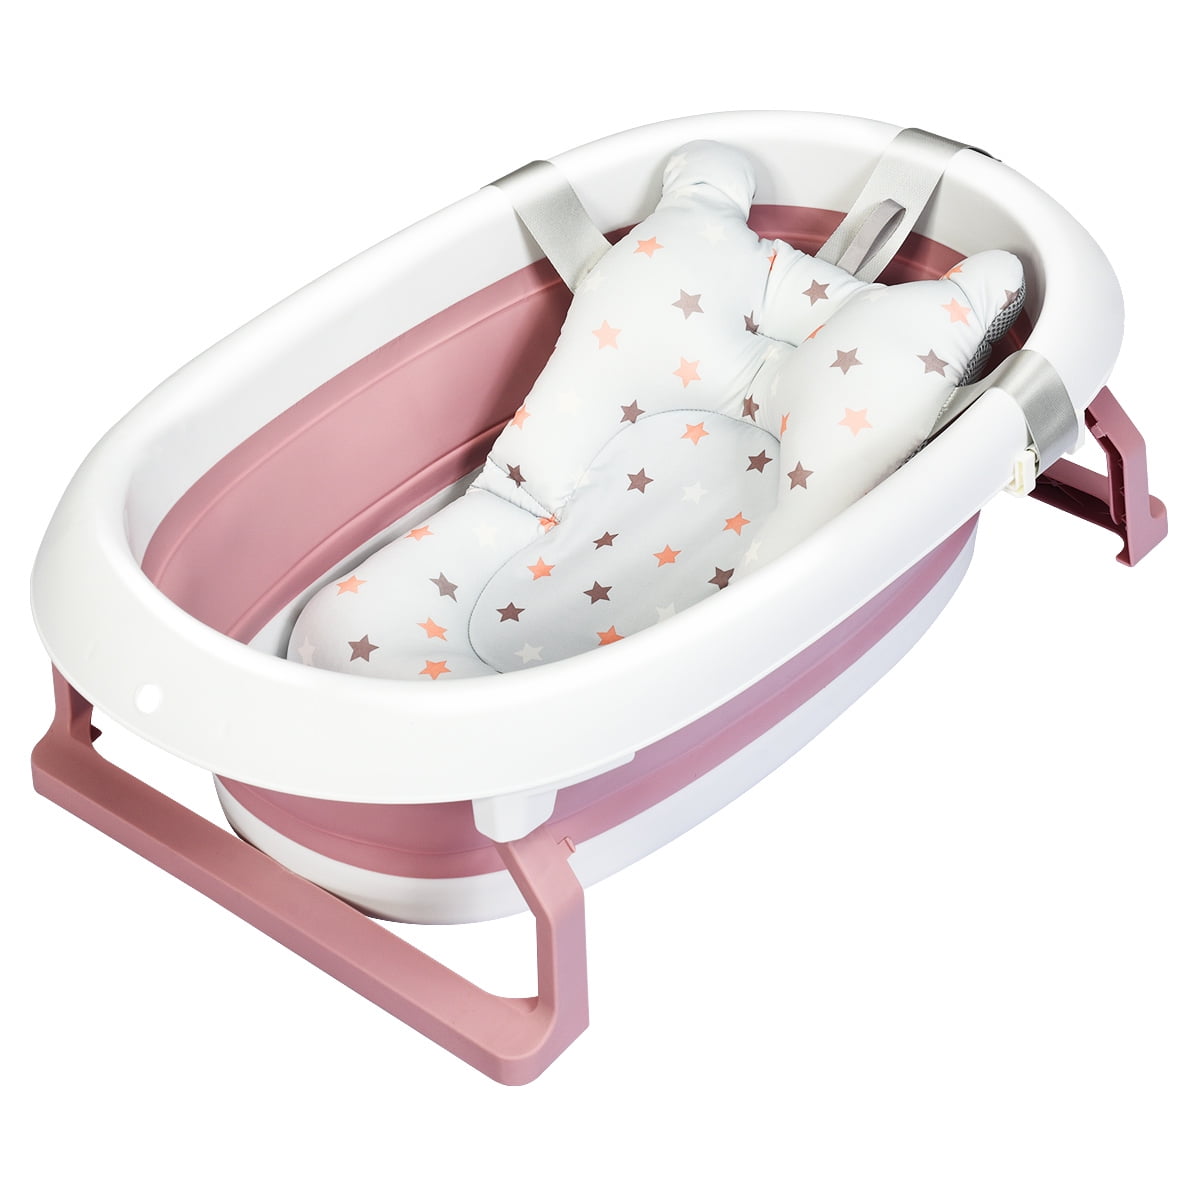 BabyShower Portable SiliconePet BathTub Bath Accessories BabyFolding Non-Slip SA 